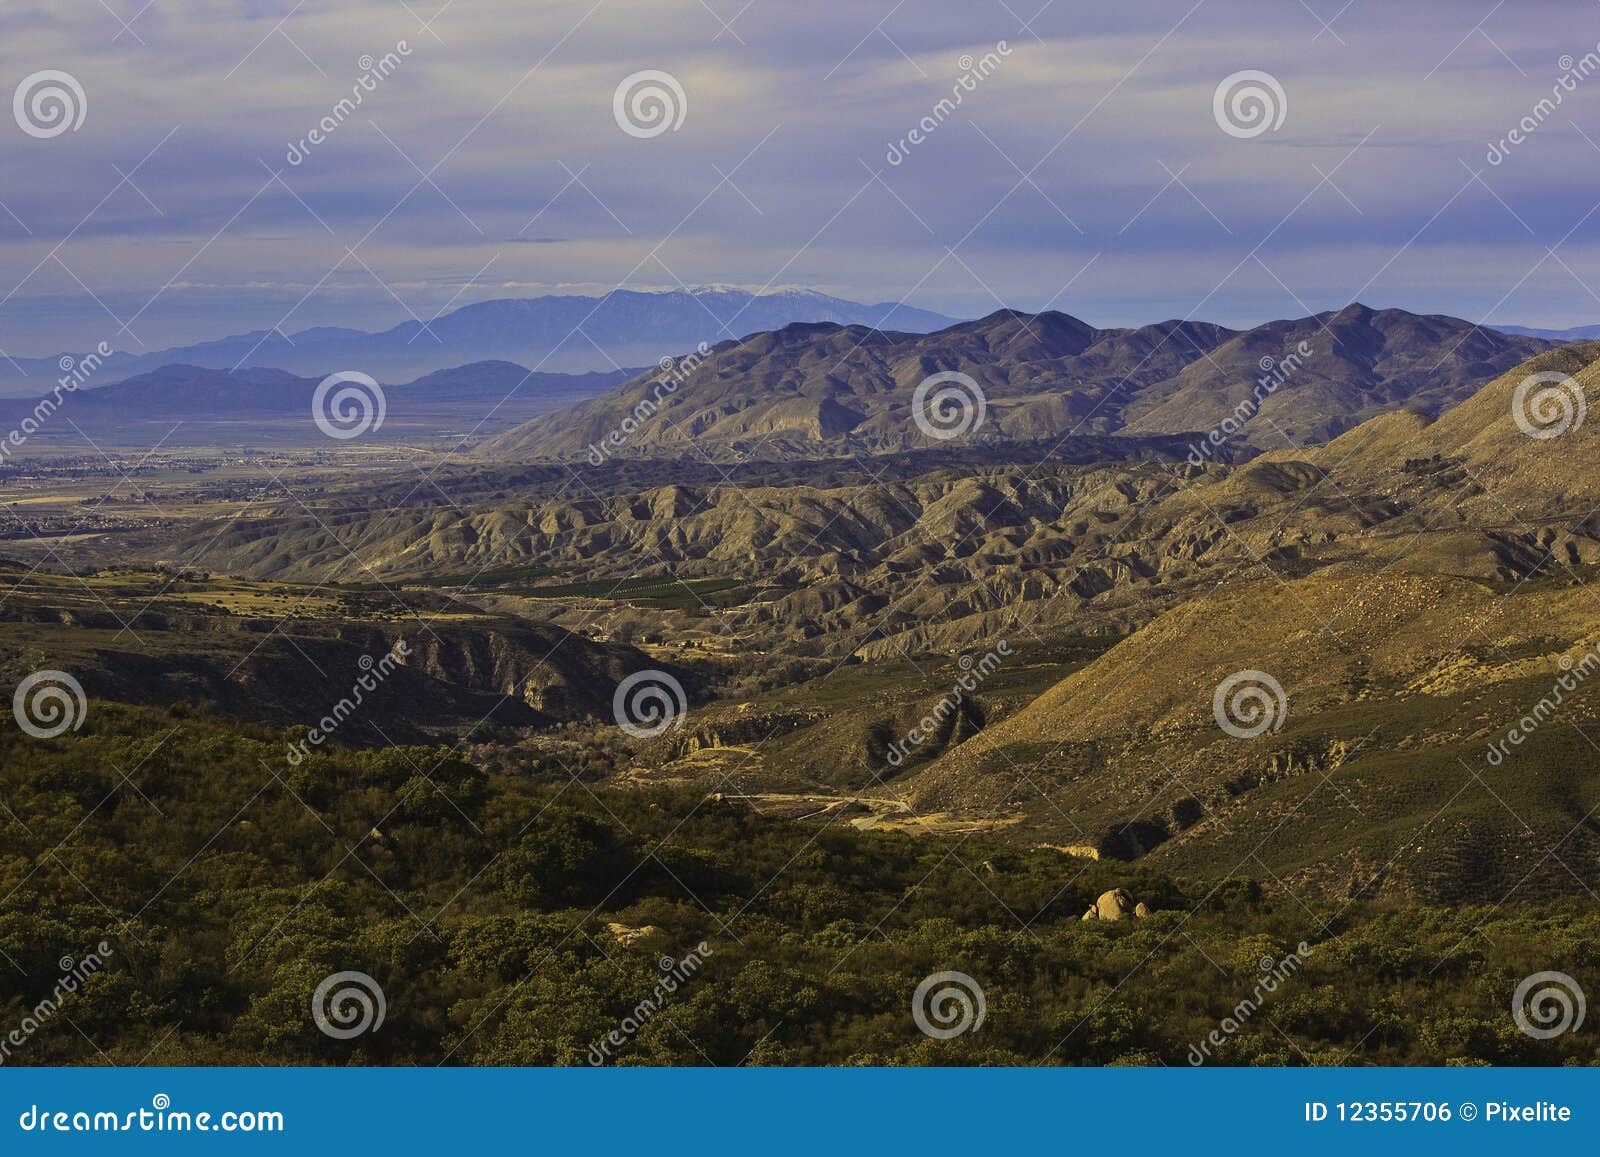 san jacinto mountains